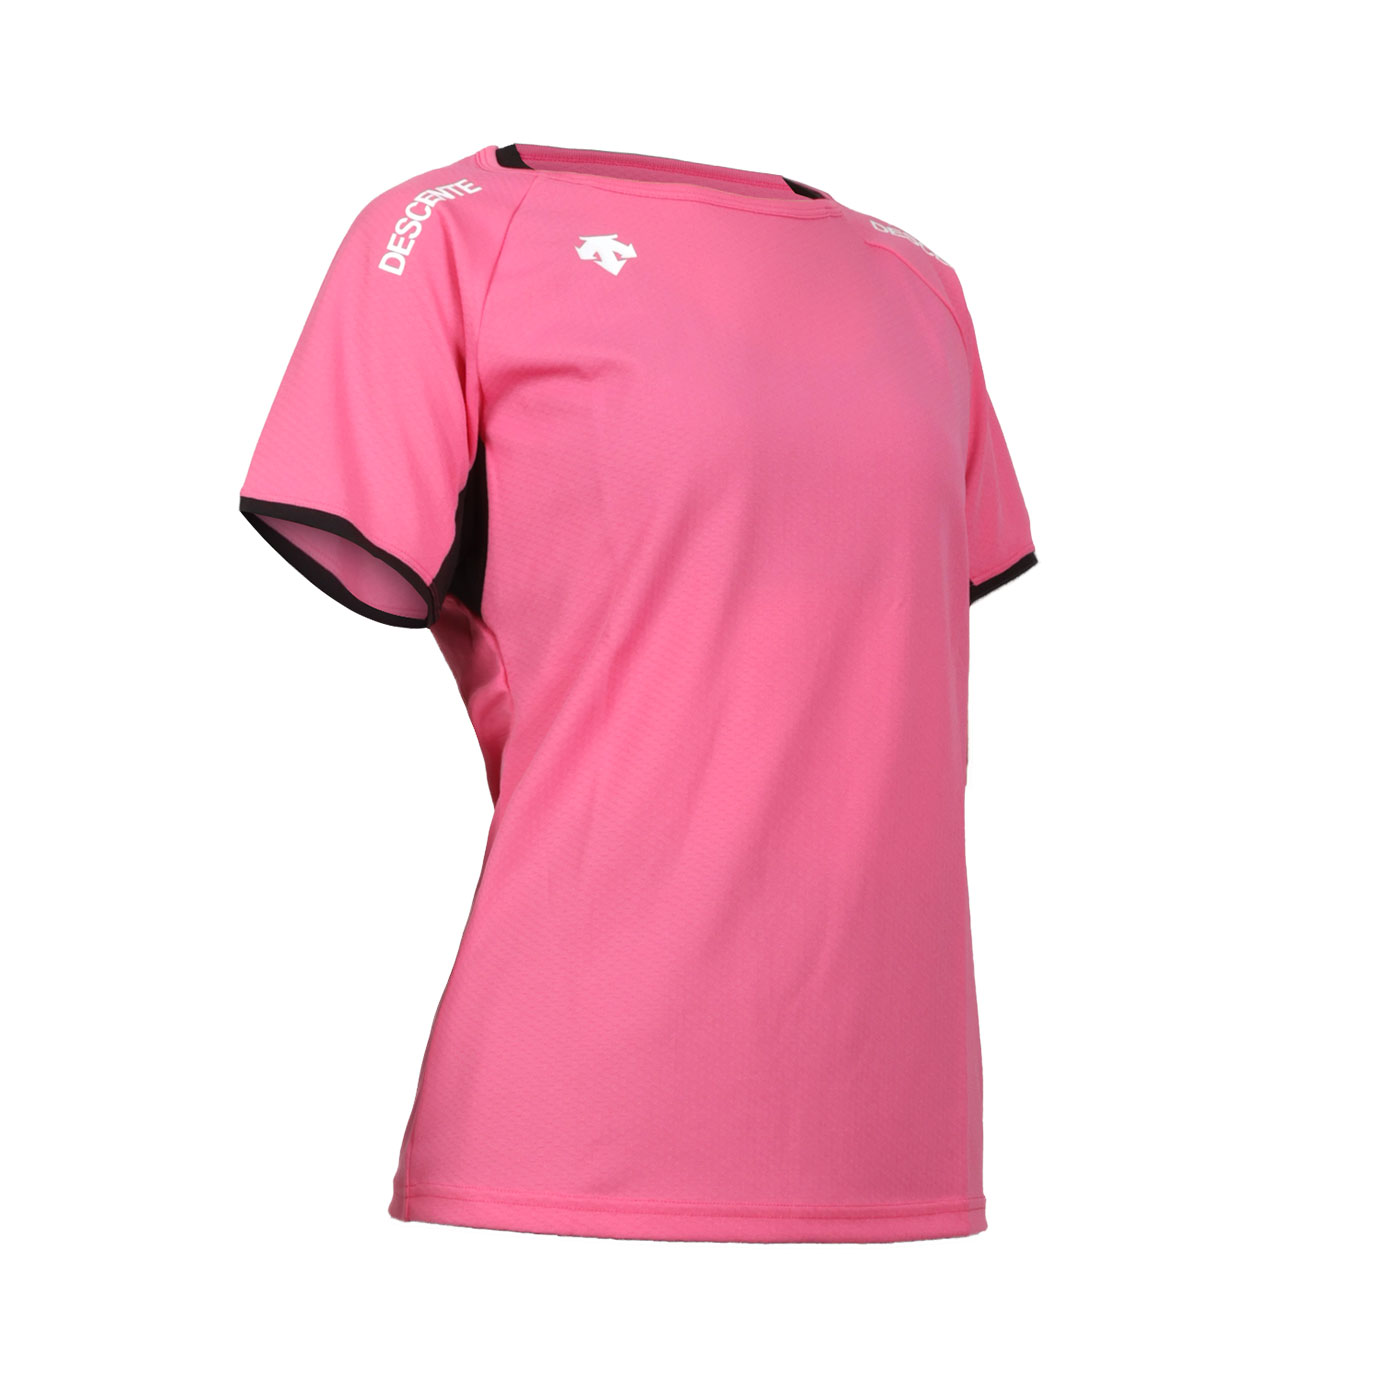 DESCENTE 女款排球短袖T恤  DVB-5223WBT-PPK - 粉紅白黑